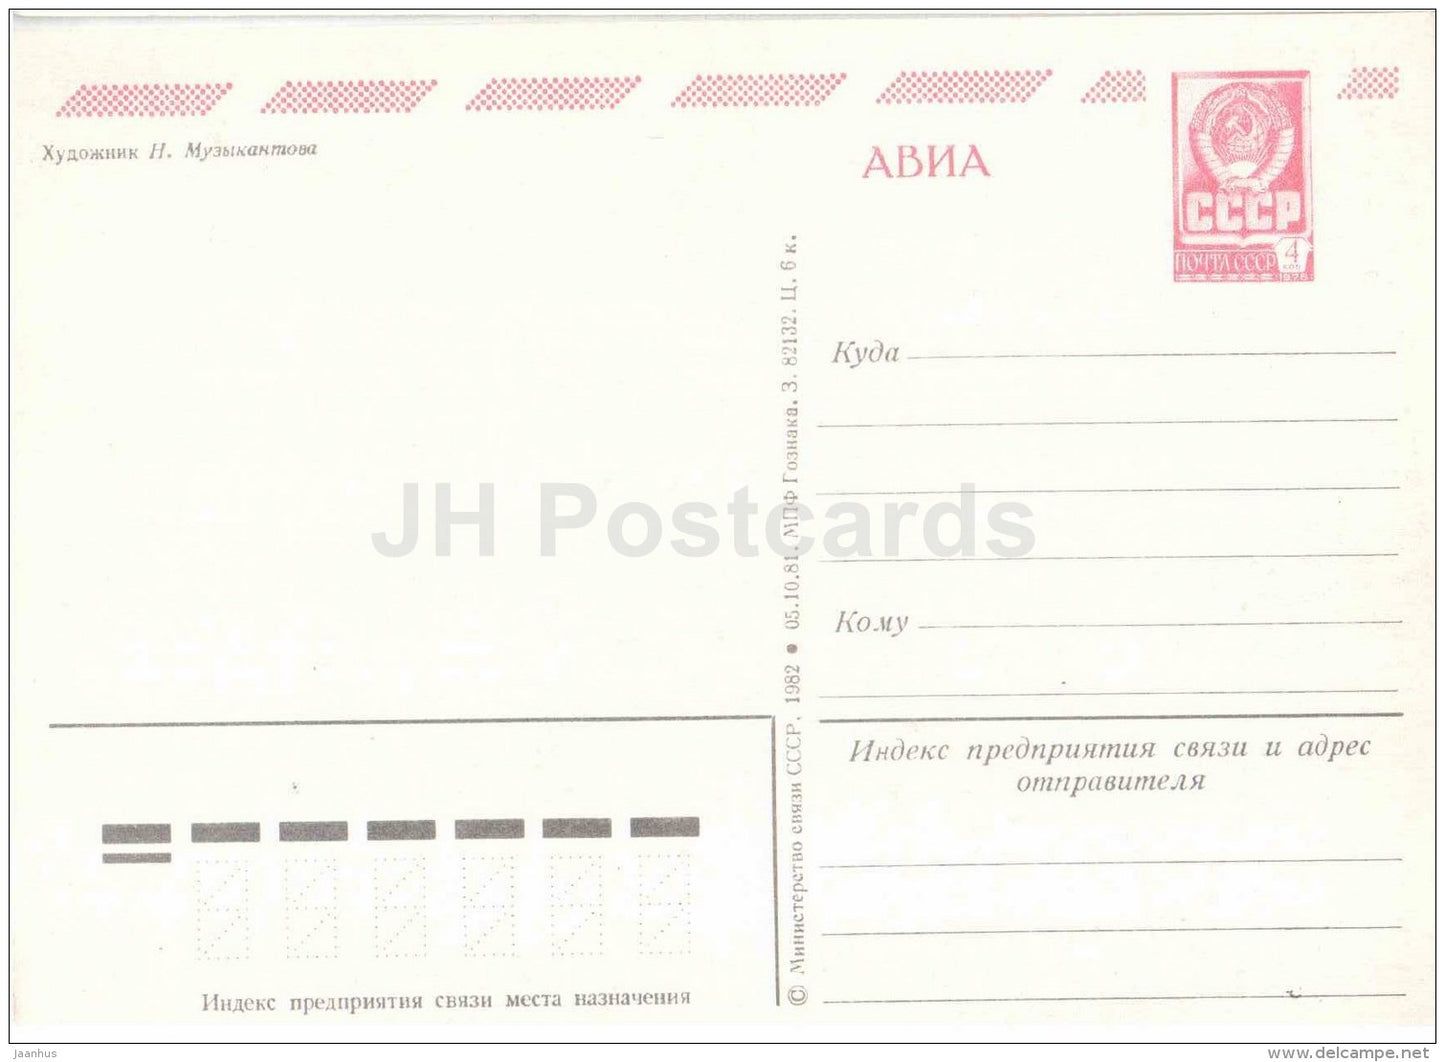 New Year Greeting Card by N. Muzykantova - bullfinch - birds - clock - postal stationery - 1982 - Russia USSR - unused - JH Postcards